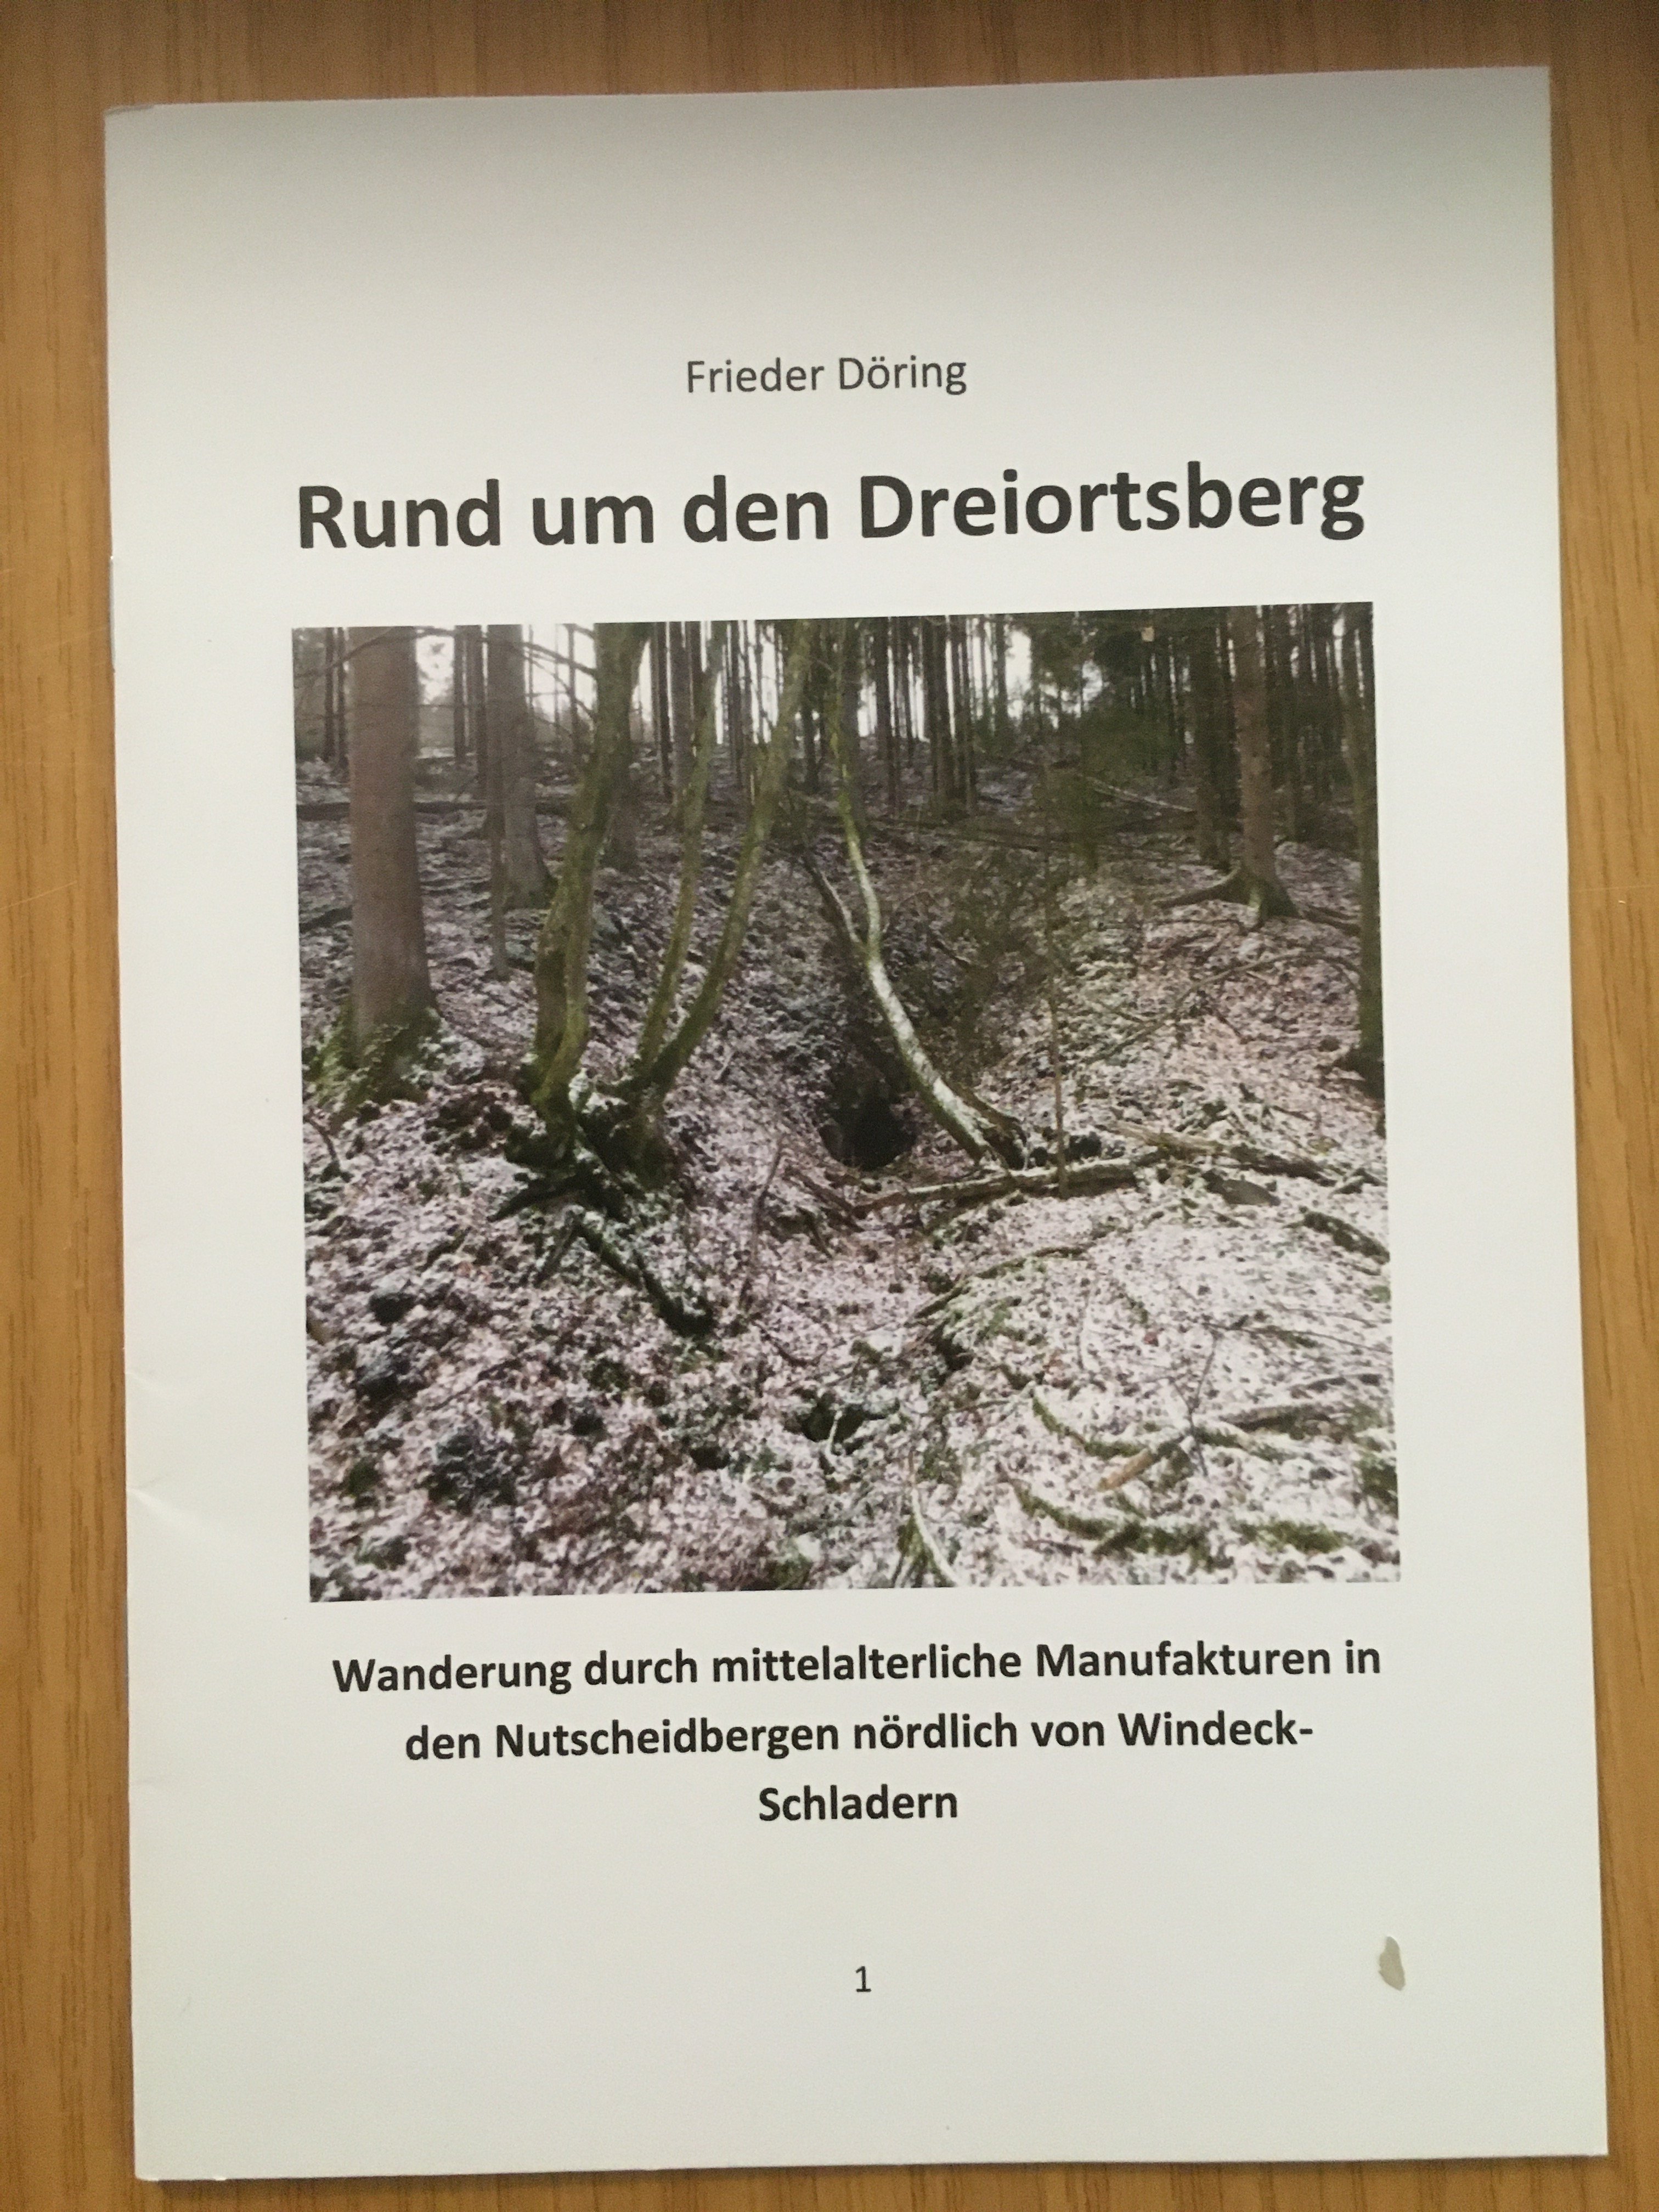 gfd (Besucherbergwerk und Bergbaumuseum "Grube Silberhardt" CC BY-NC-SA)